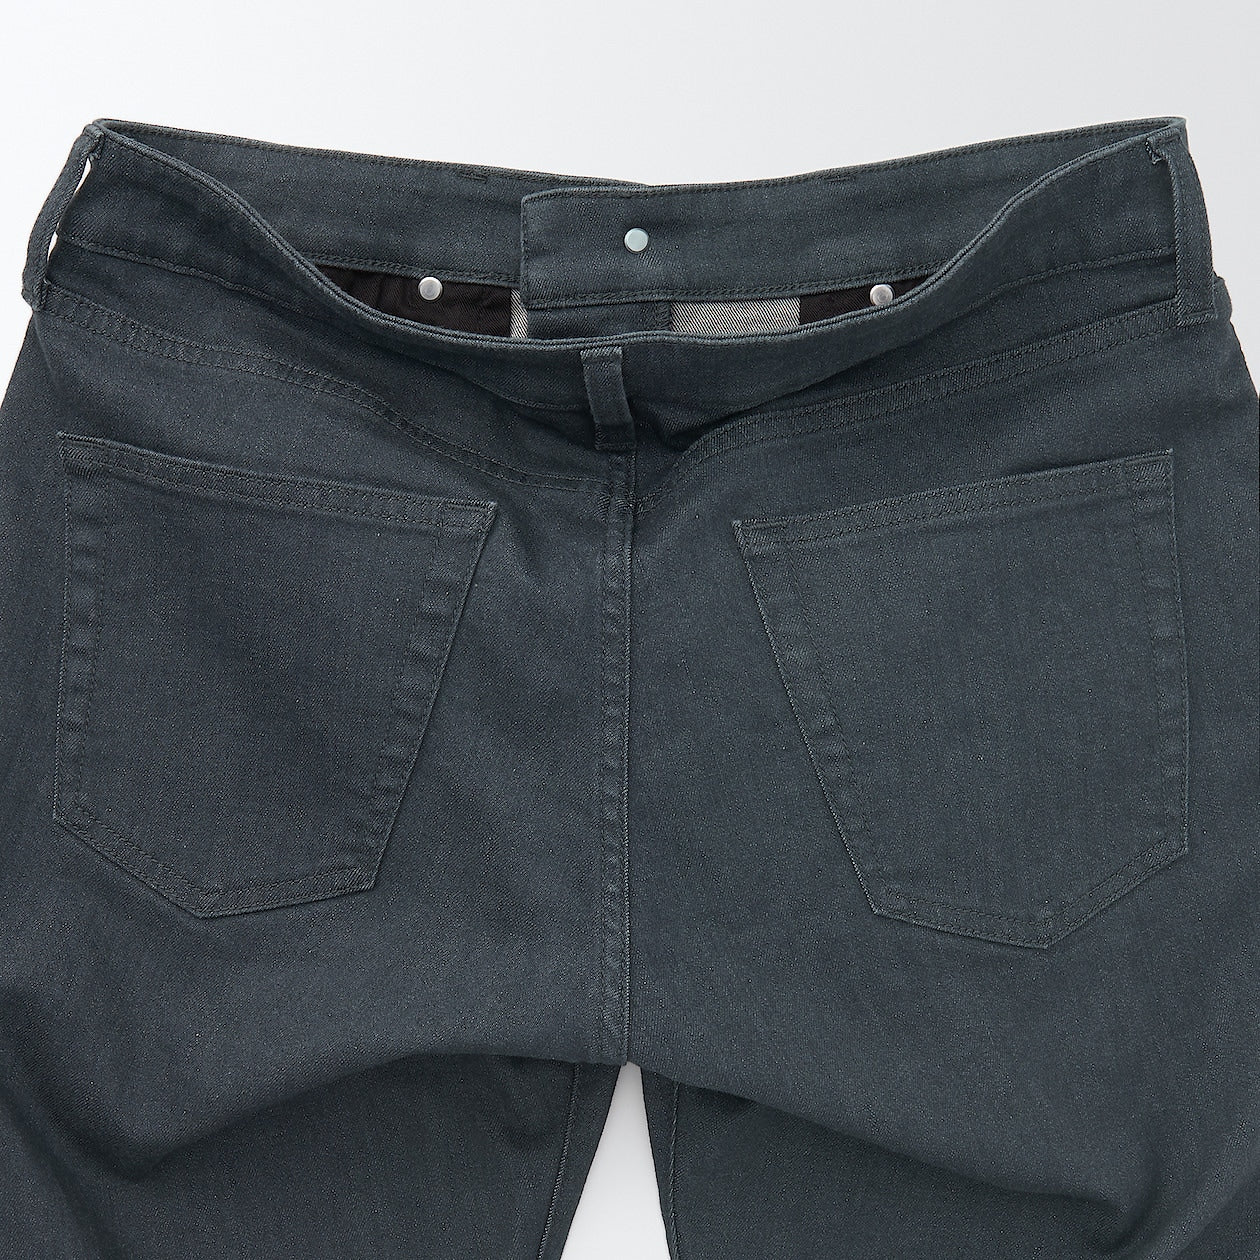 Men's Super Stretch Denim Skinny Pants Charcoal Grey (L 32inch / 82cm)